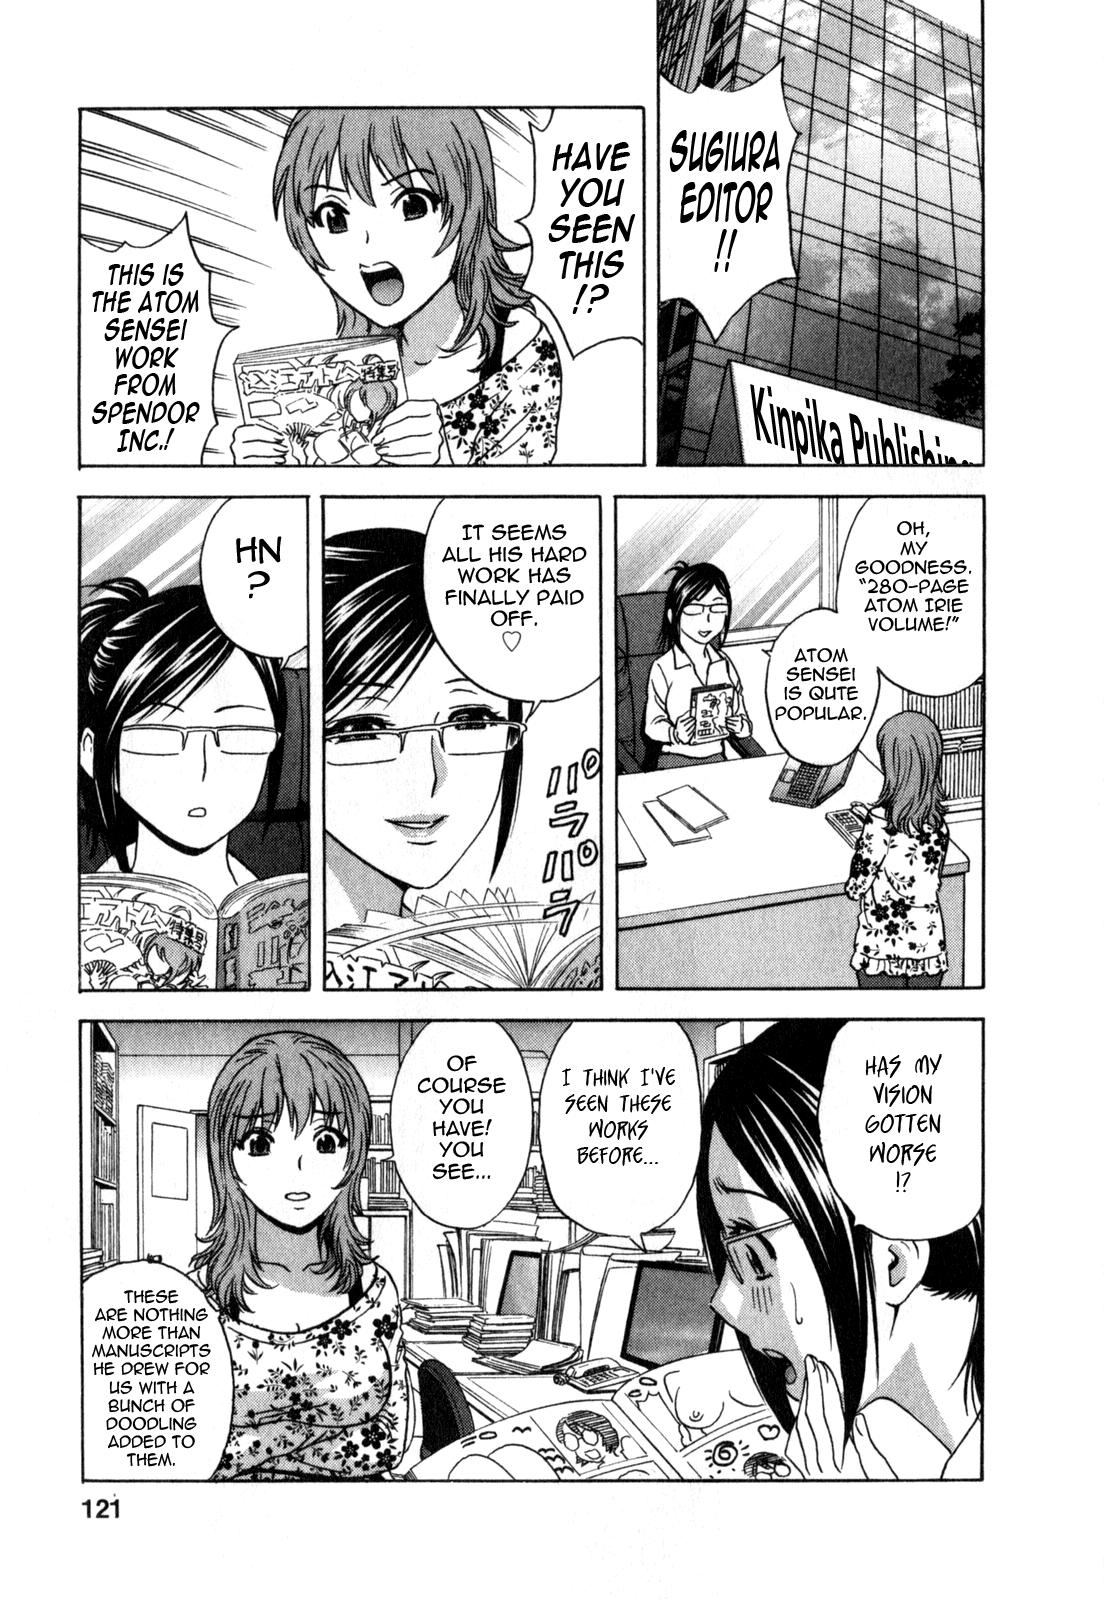 Life with Married Women Just Like a Manga 3 120